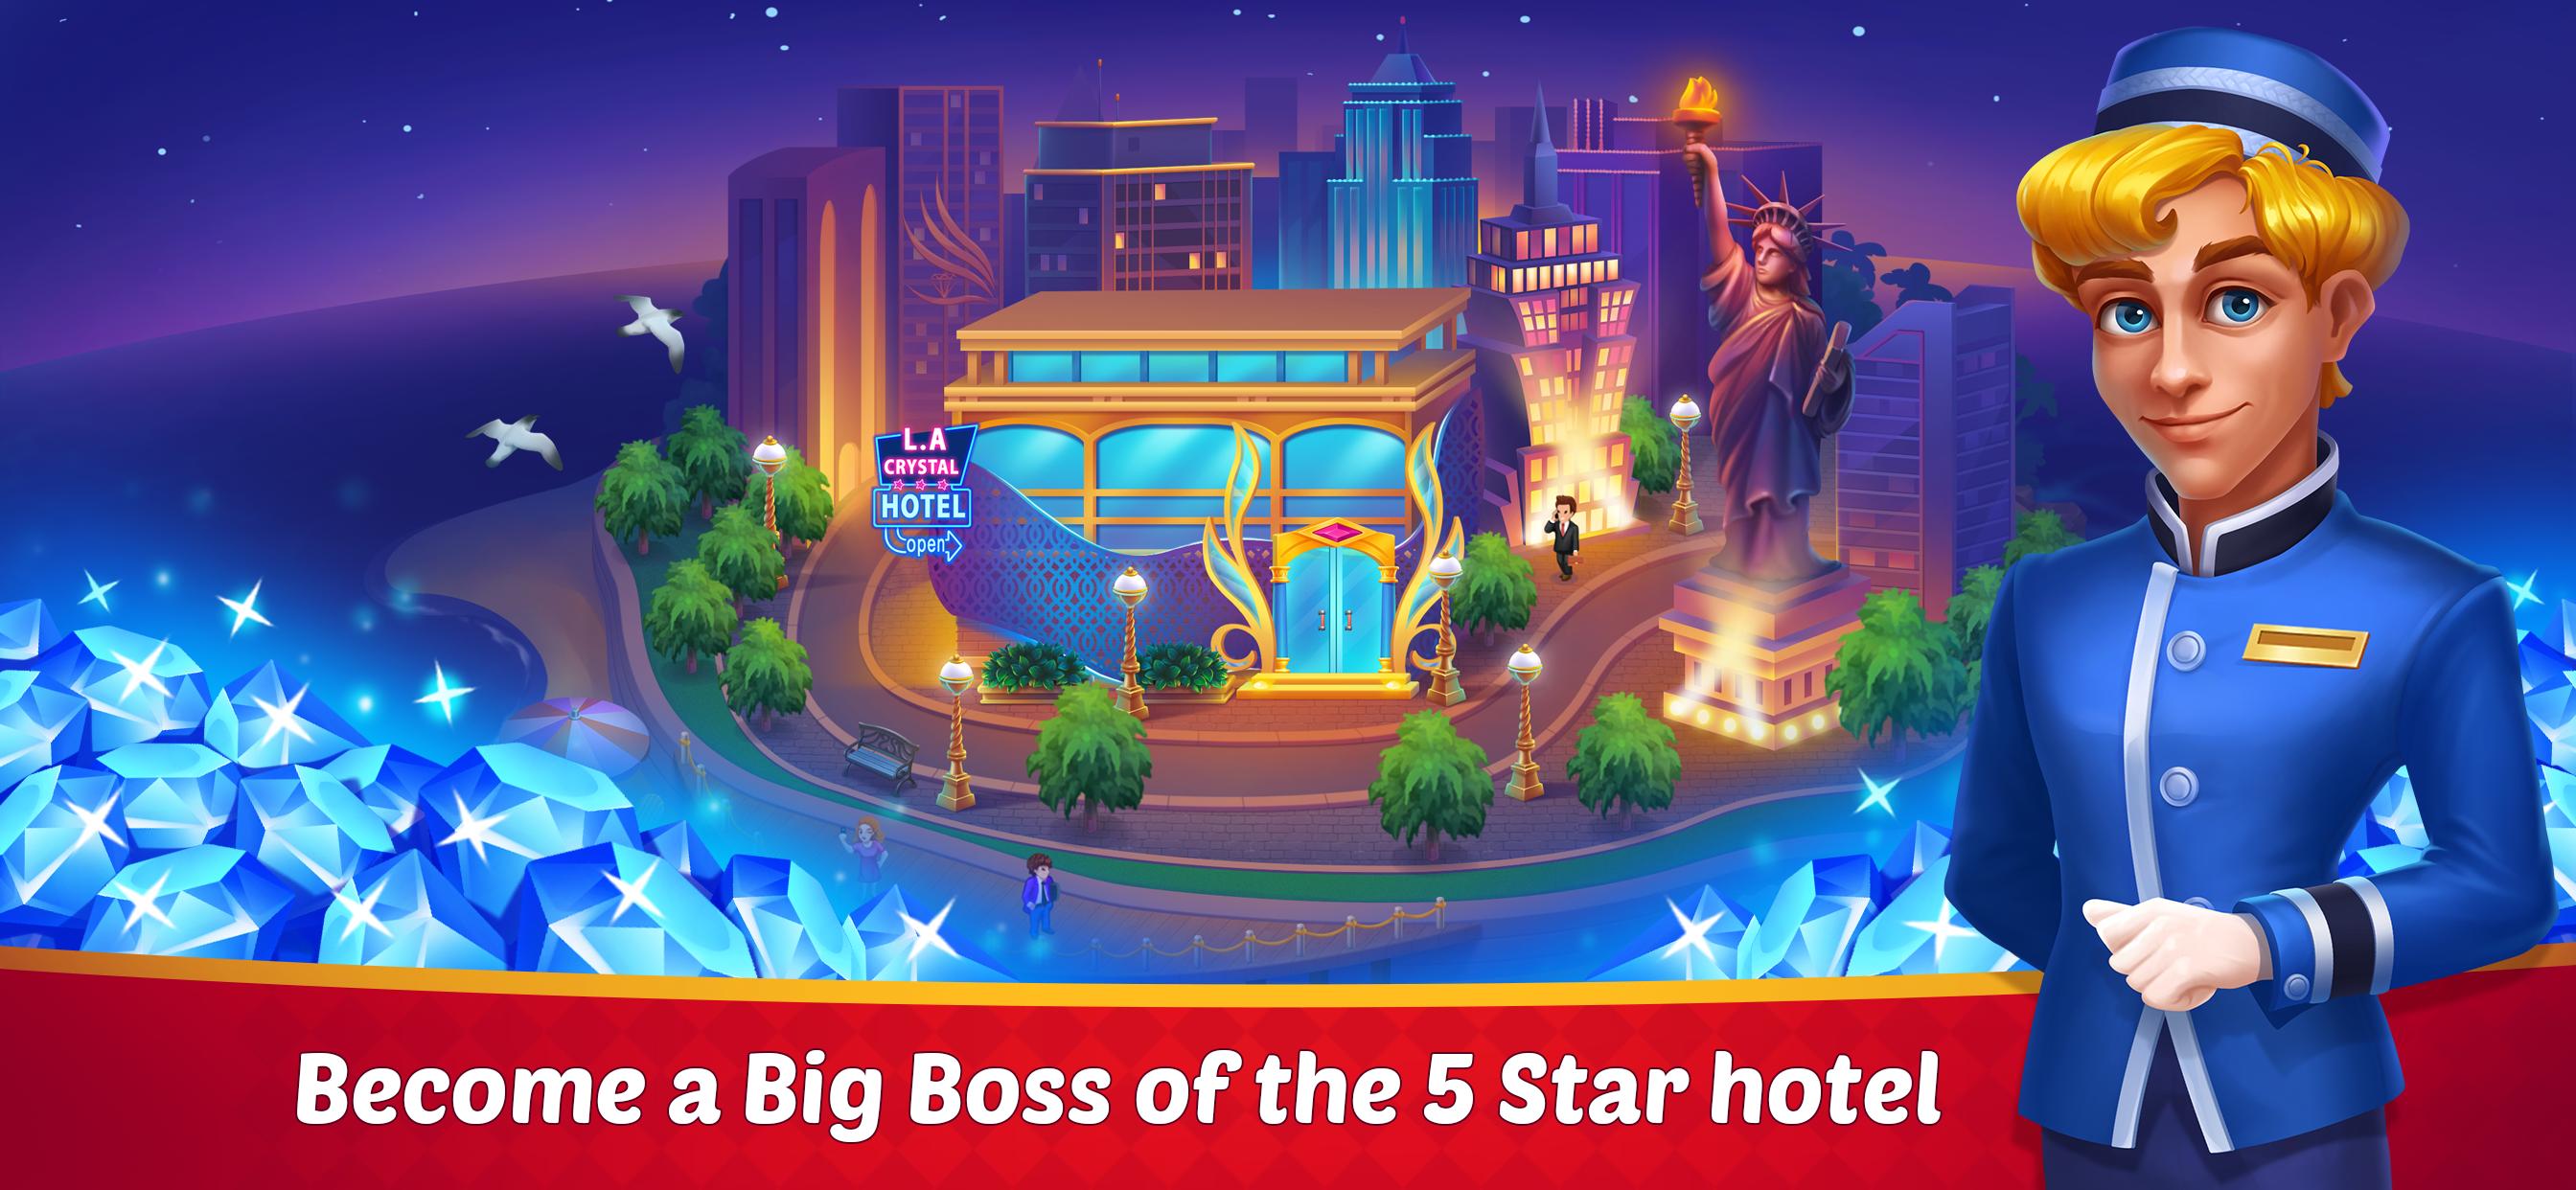 Dream Hotel Hotel Manager Simulation games 1.2.4 Screenshot 8